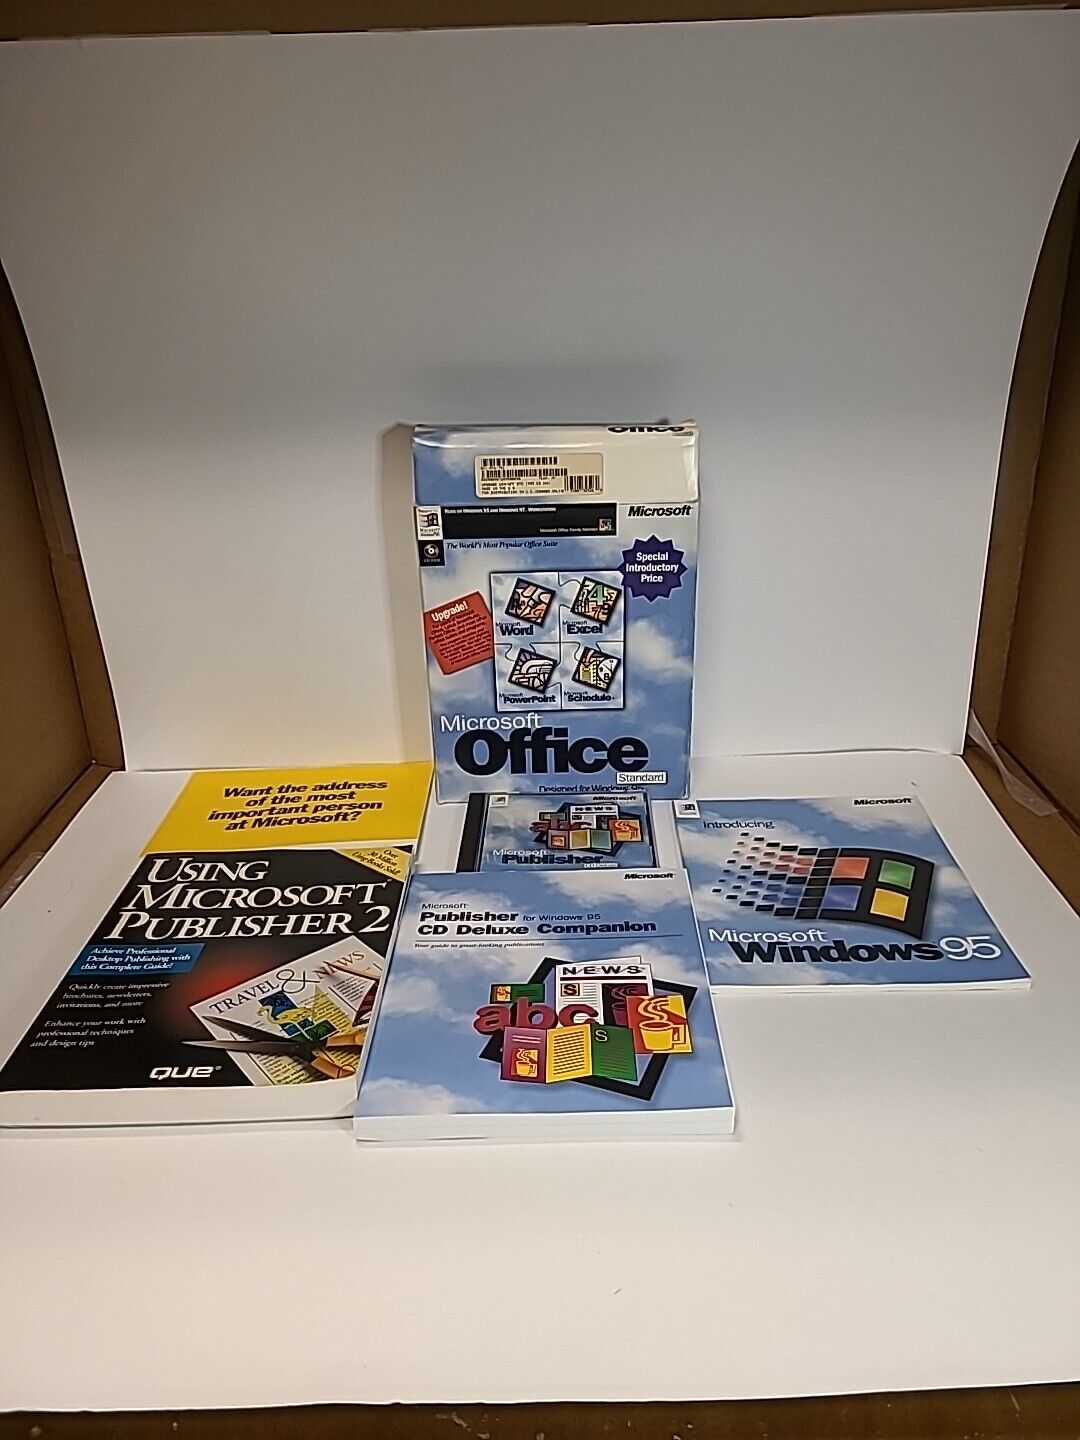 Microsoft Office Standard Designed For Windows 95 Using Microsoft Publisher 2